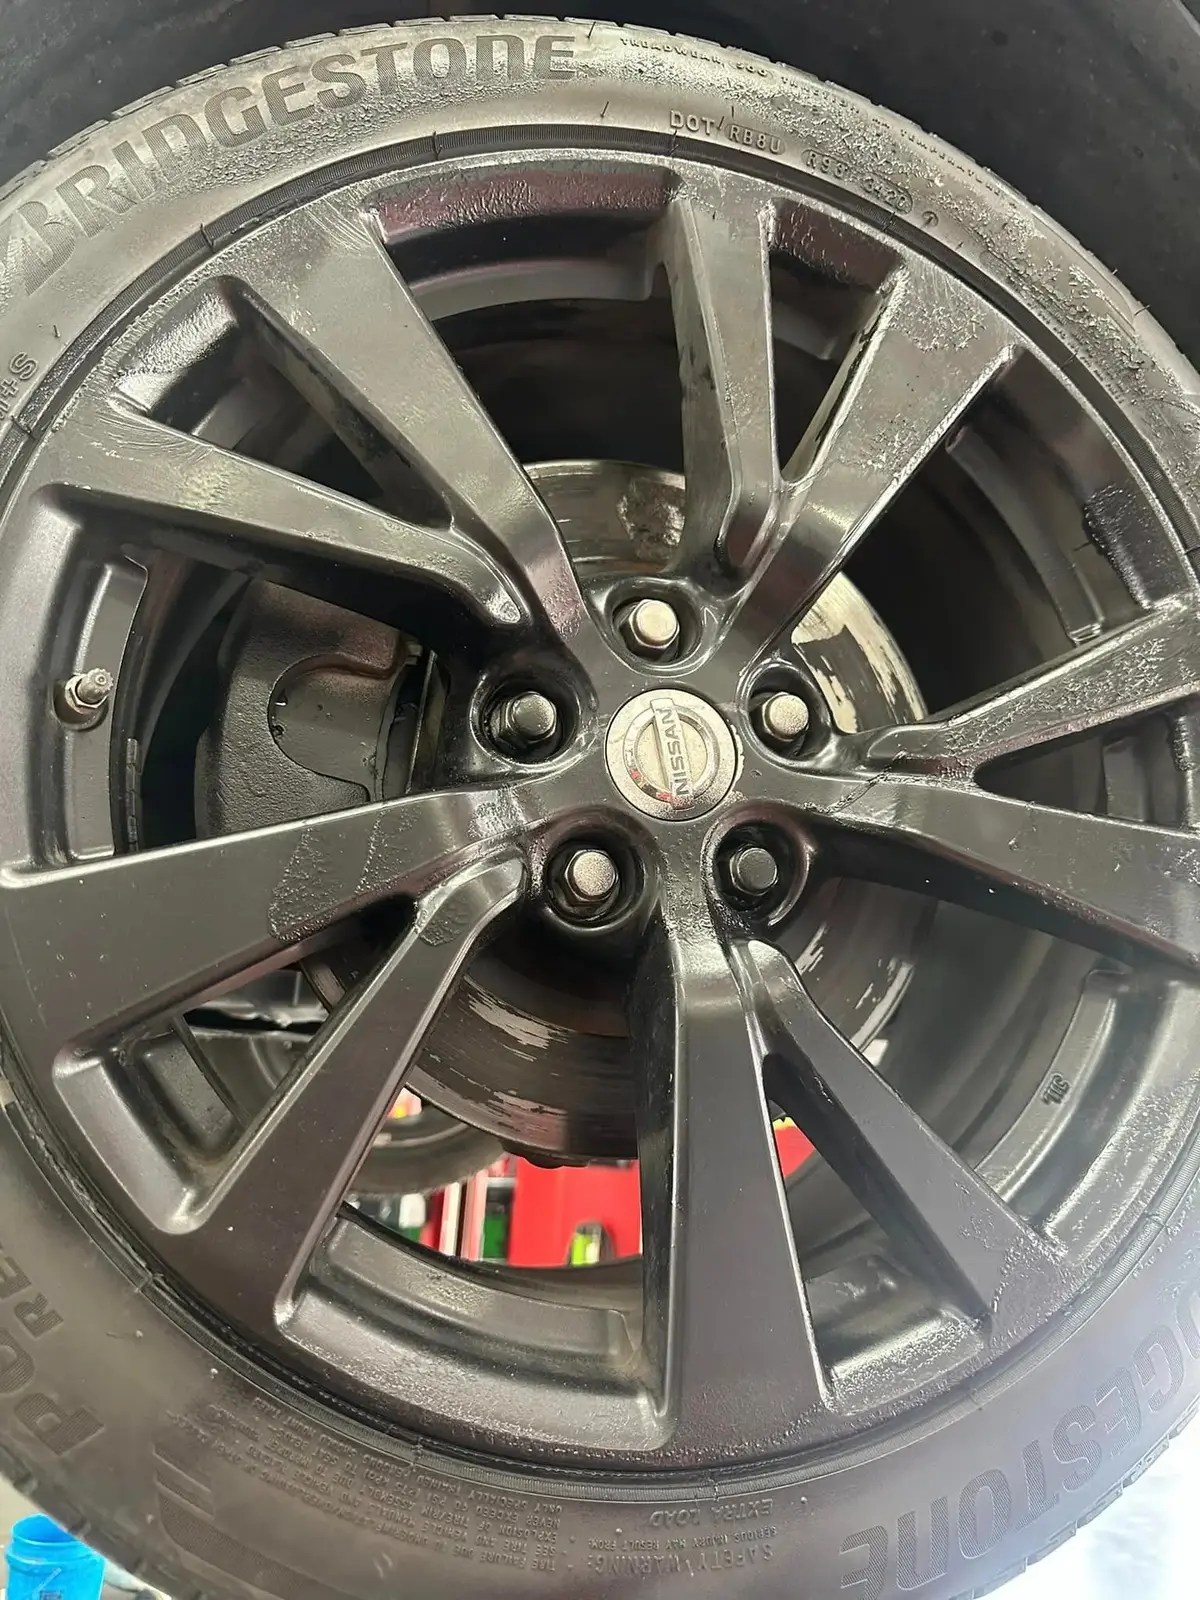 Painted disc brake rotors on car